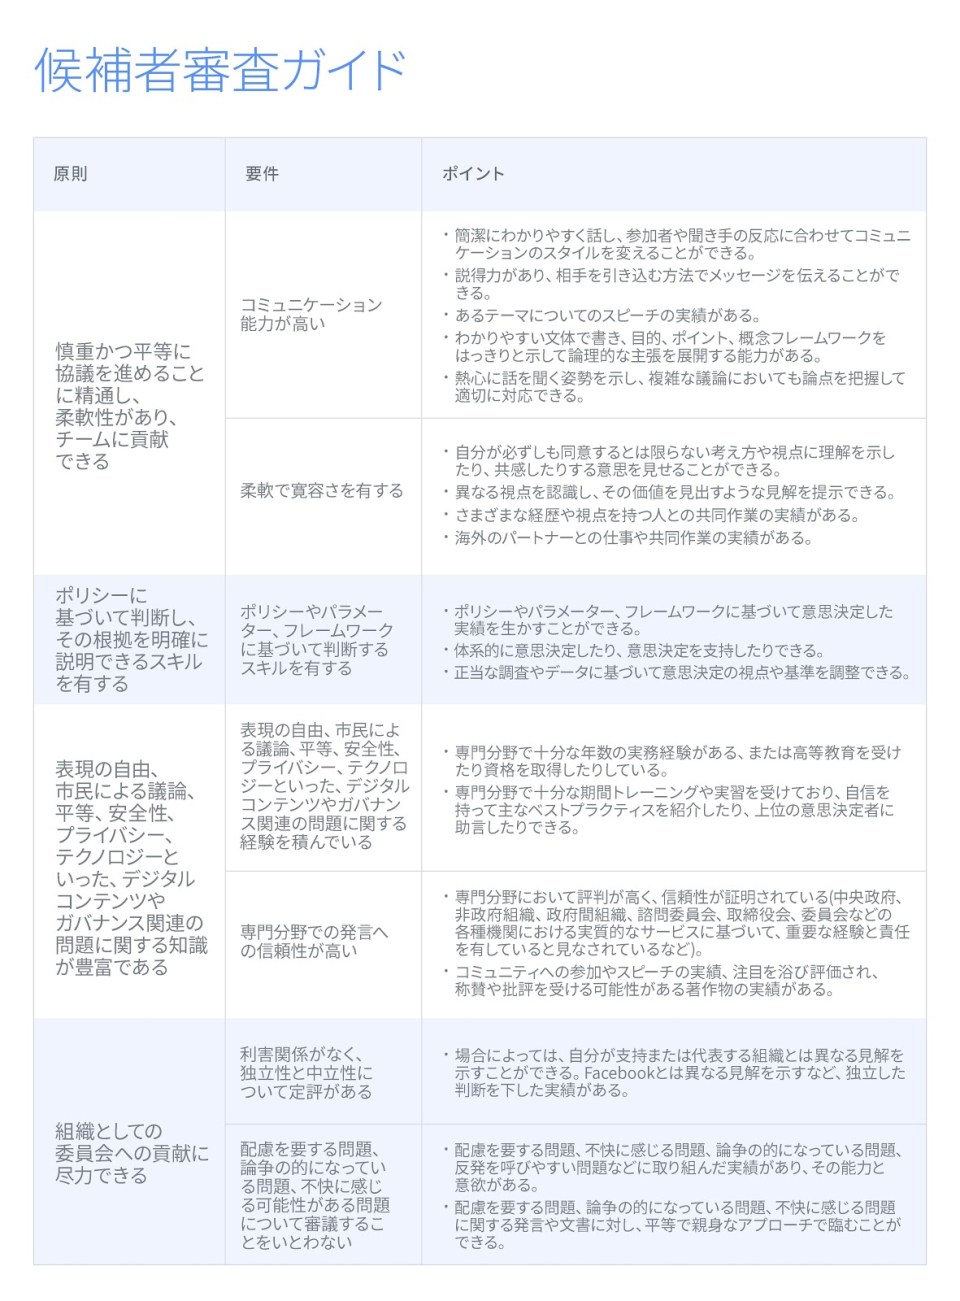 Candidate Review Guide_V5 copy_ONLINE_ja_JP